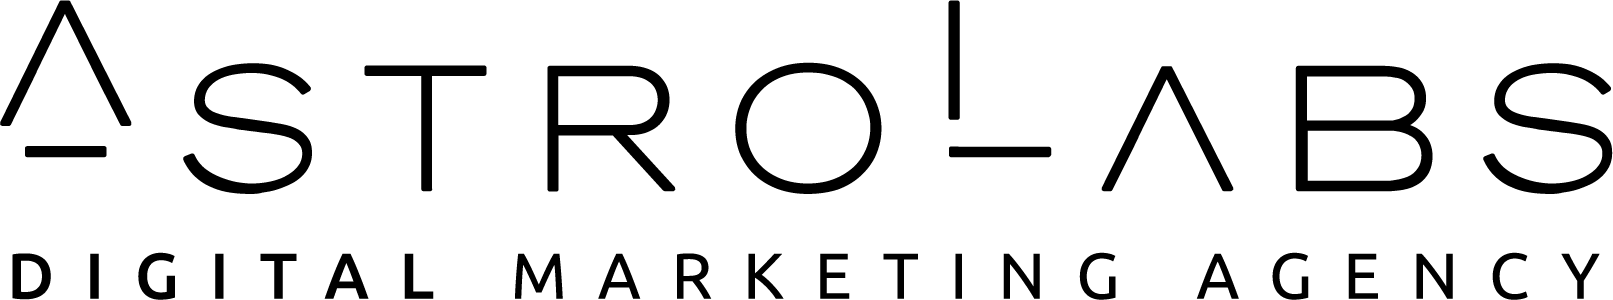 astrolabs logo